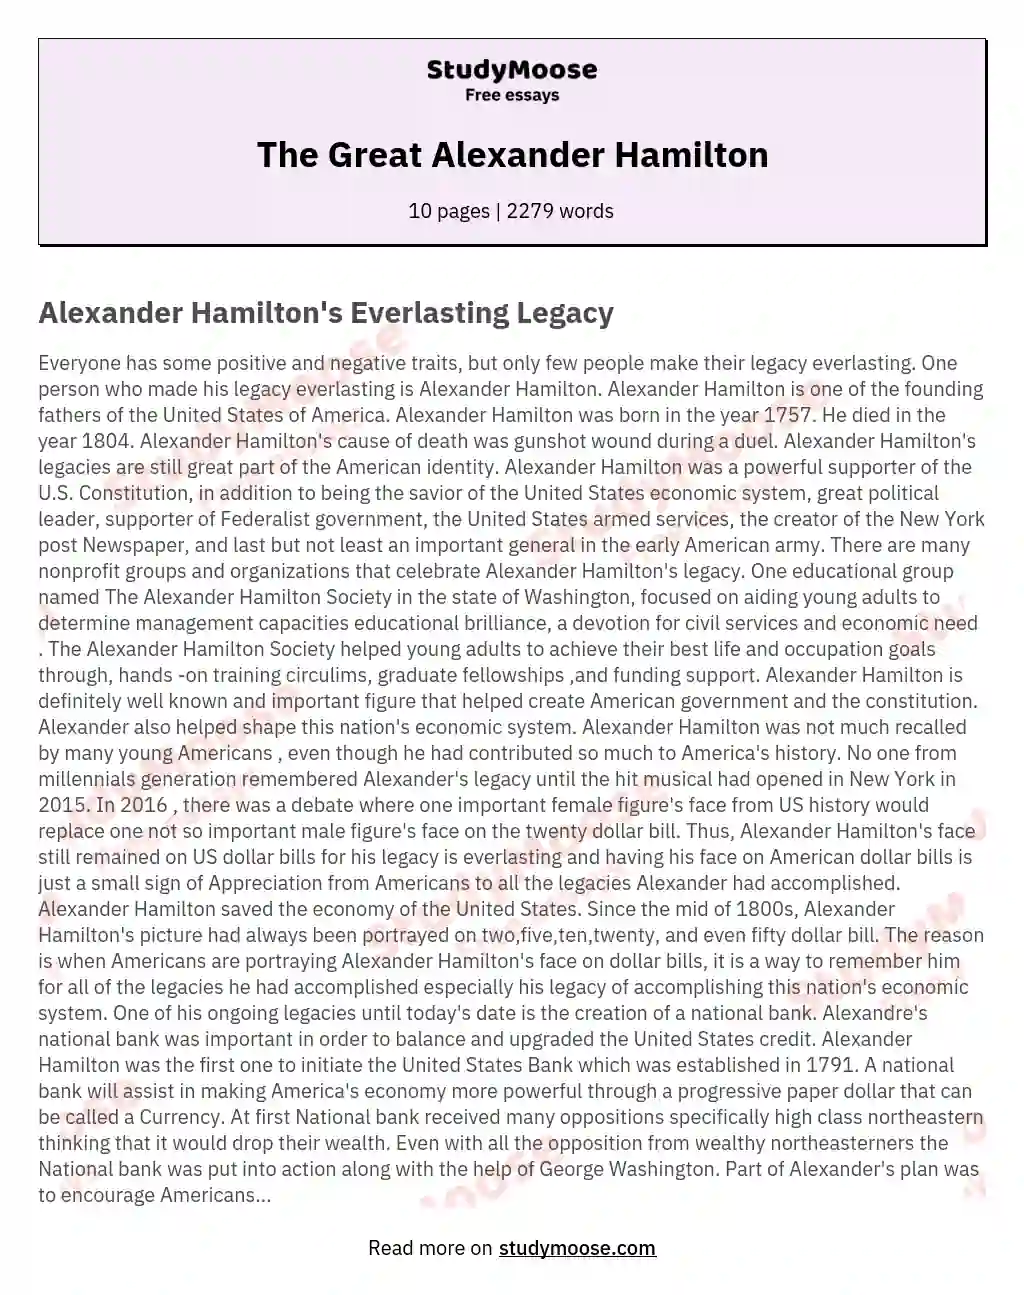 The Great Alexander Hamilton